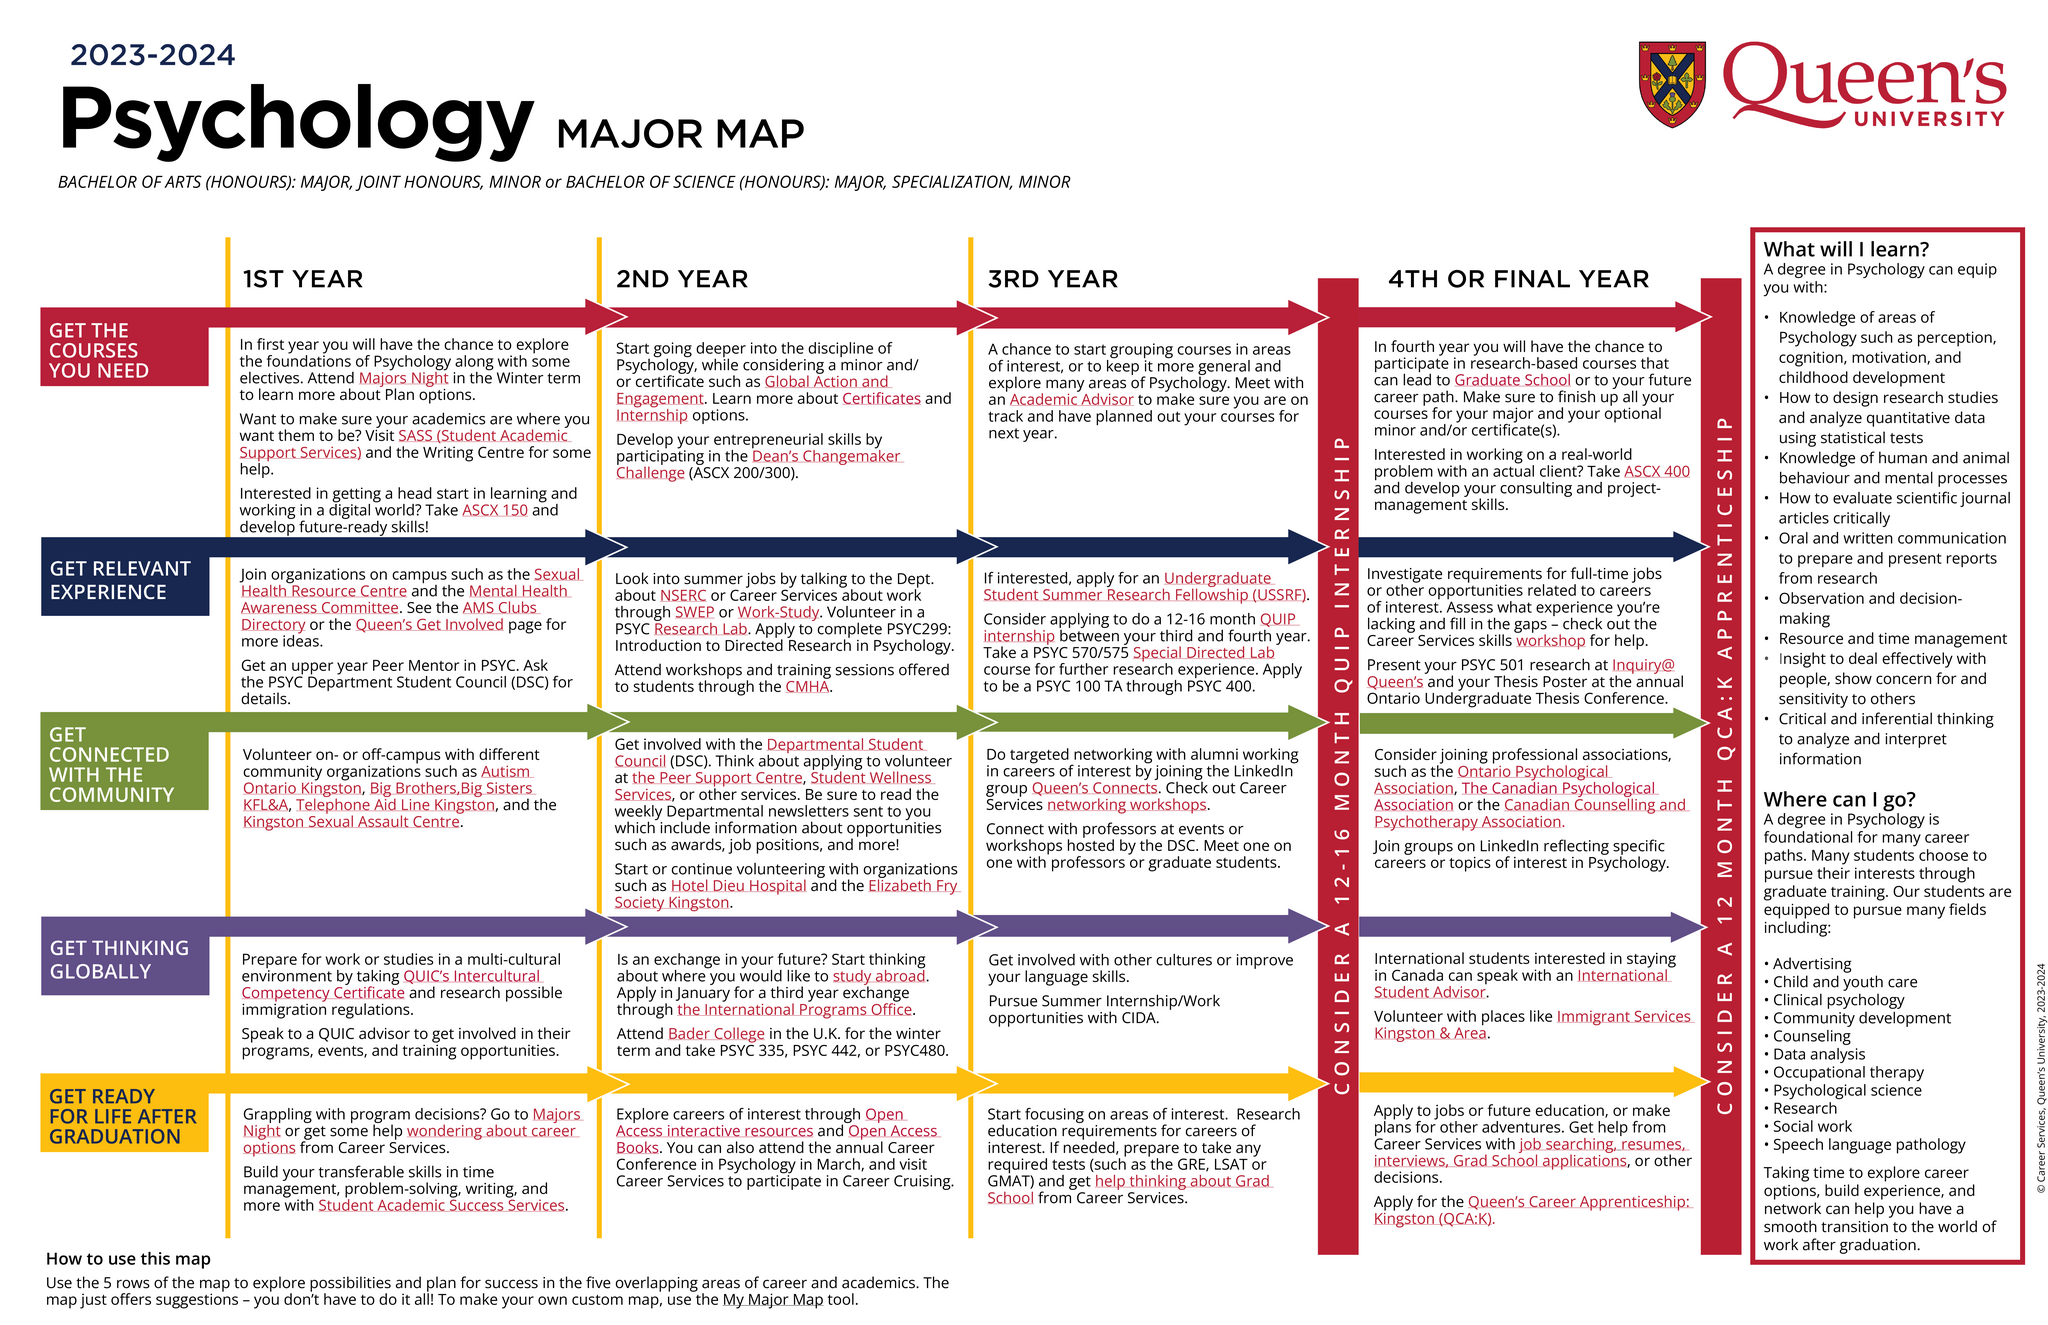 Psychology Major Map spread 